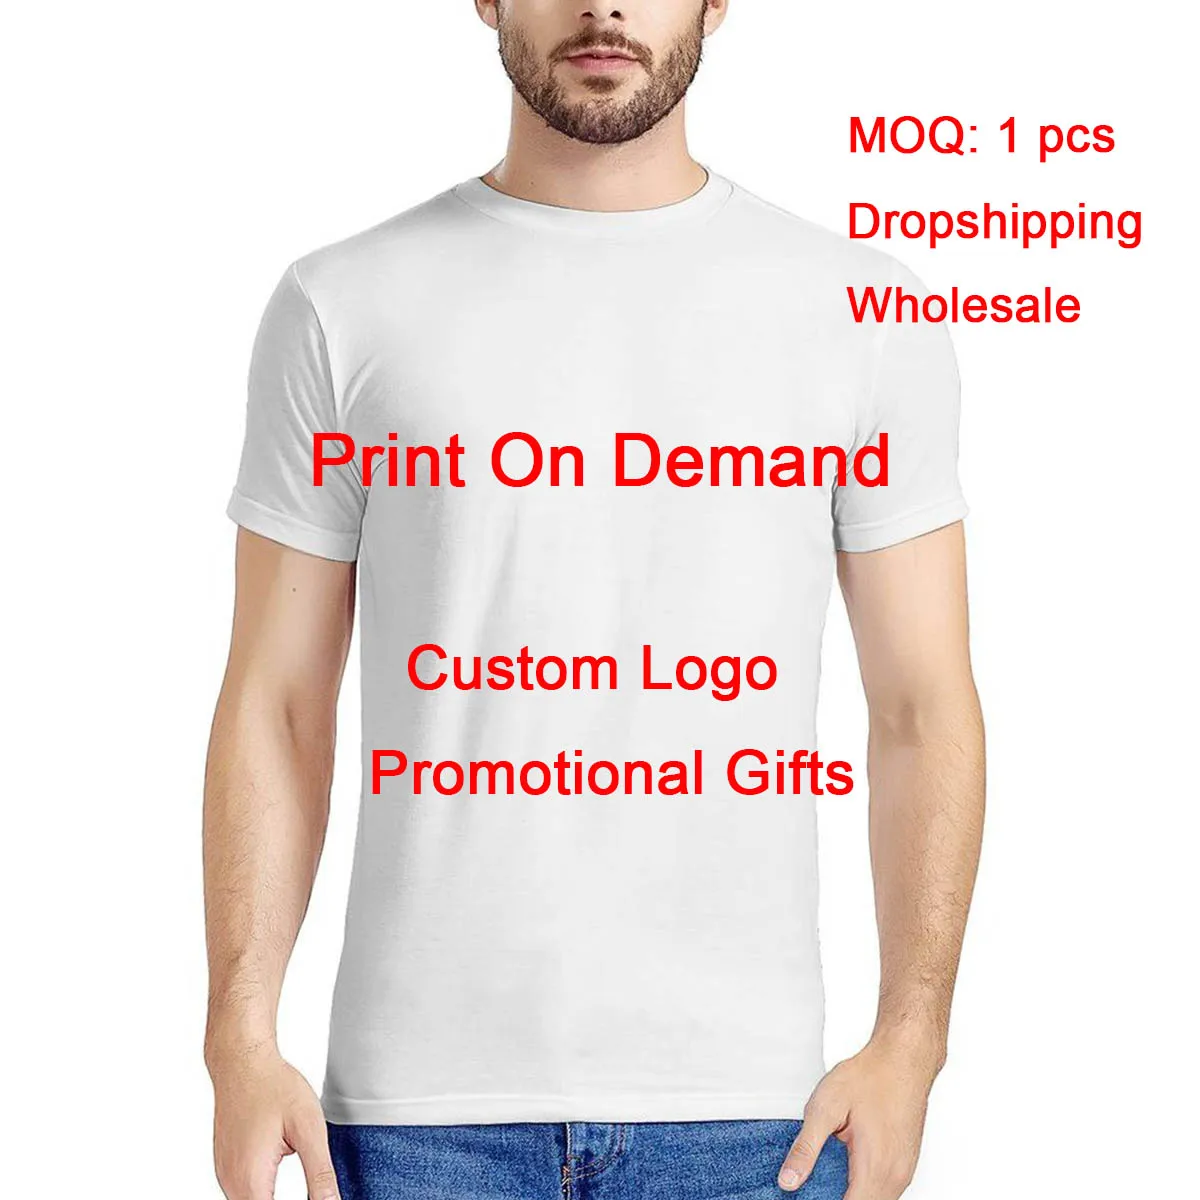 Women's Round Neck T-shirt, Print on Demand Dropshipping